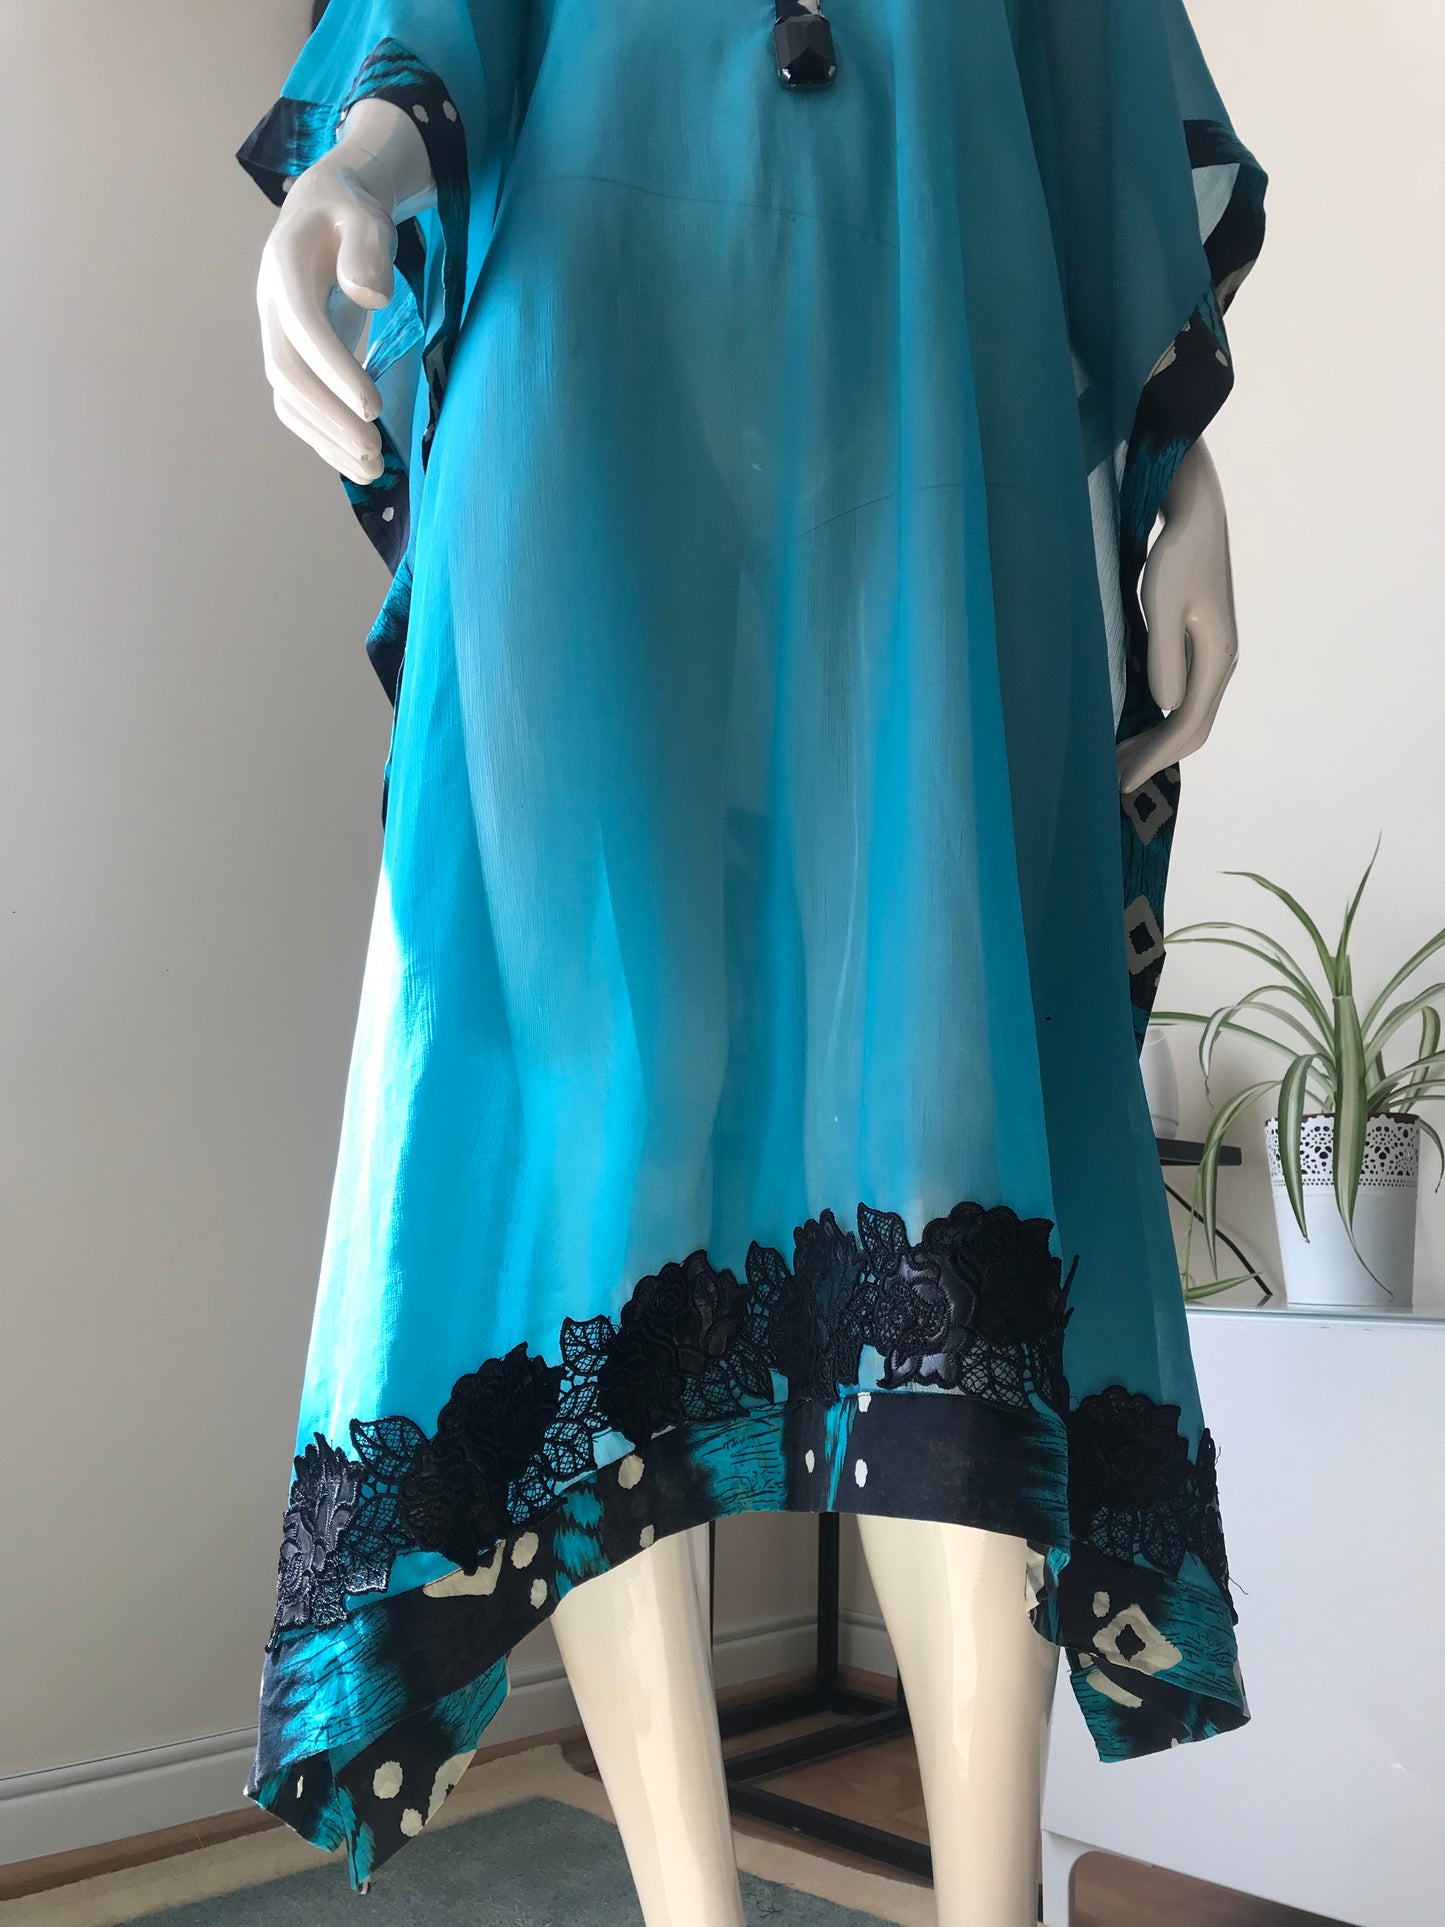 100% Chiffon Ice Blue Kaftan One size Ladies Summer Kimono Kaftan Long dress